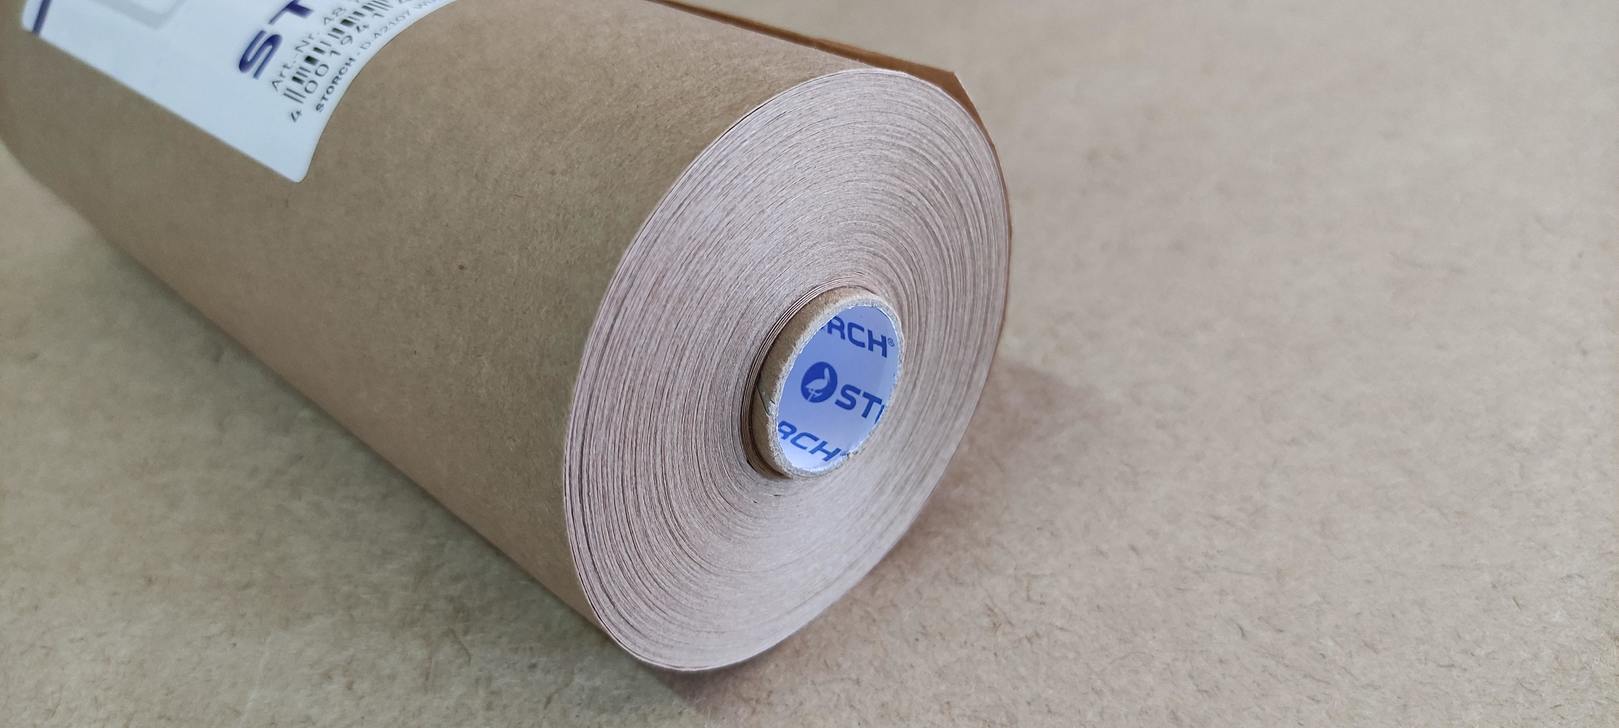 Укрывочная защитная бумага с малярной лентой 30 см х 25 м STORCH для малярных работ, покраски